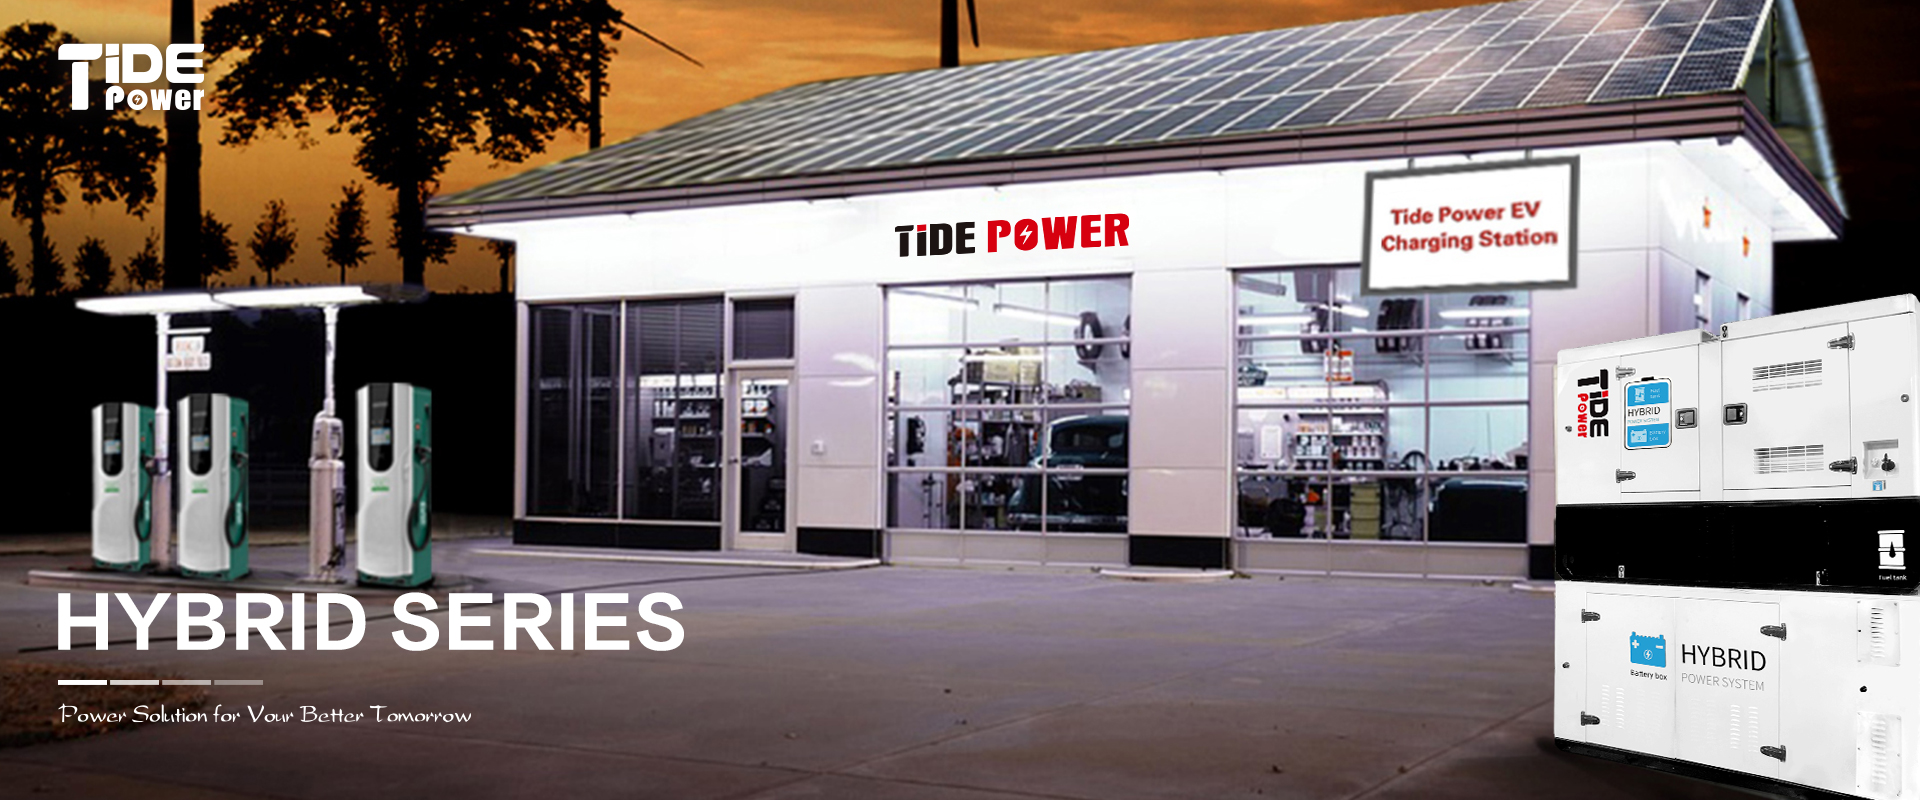 tidepower,hybrid series